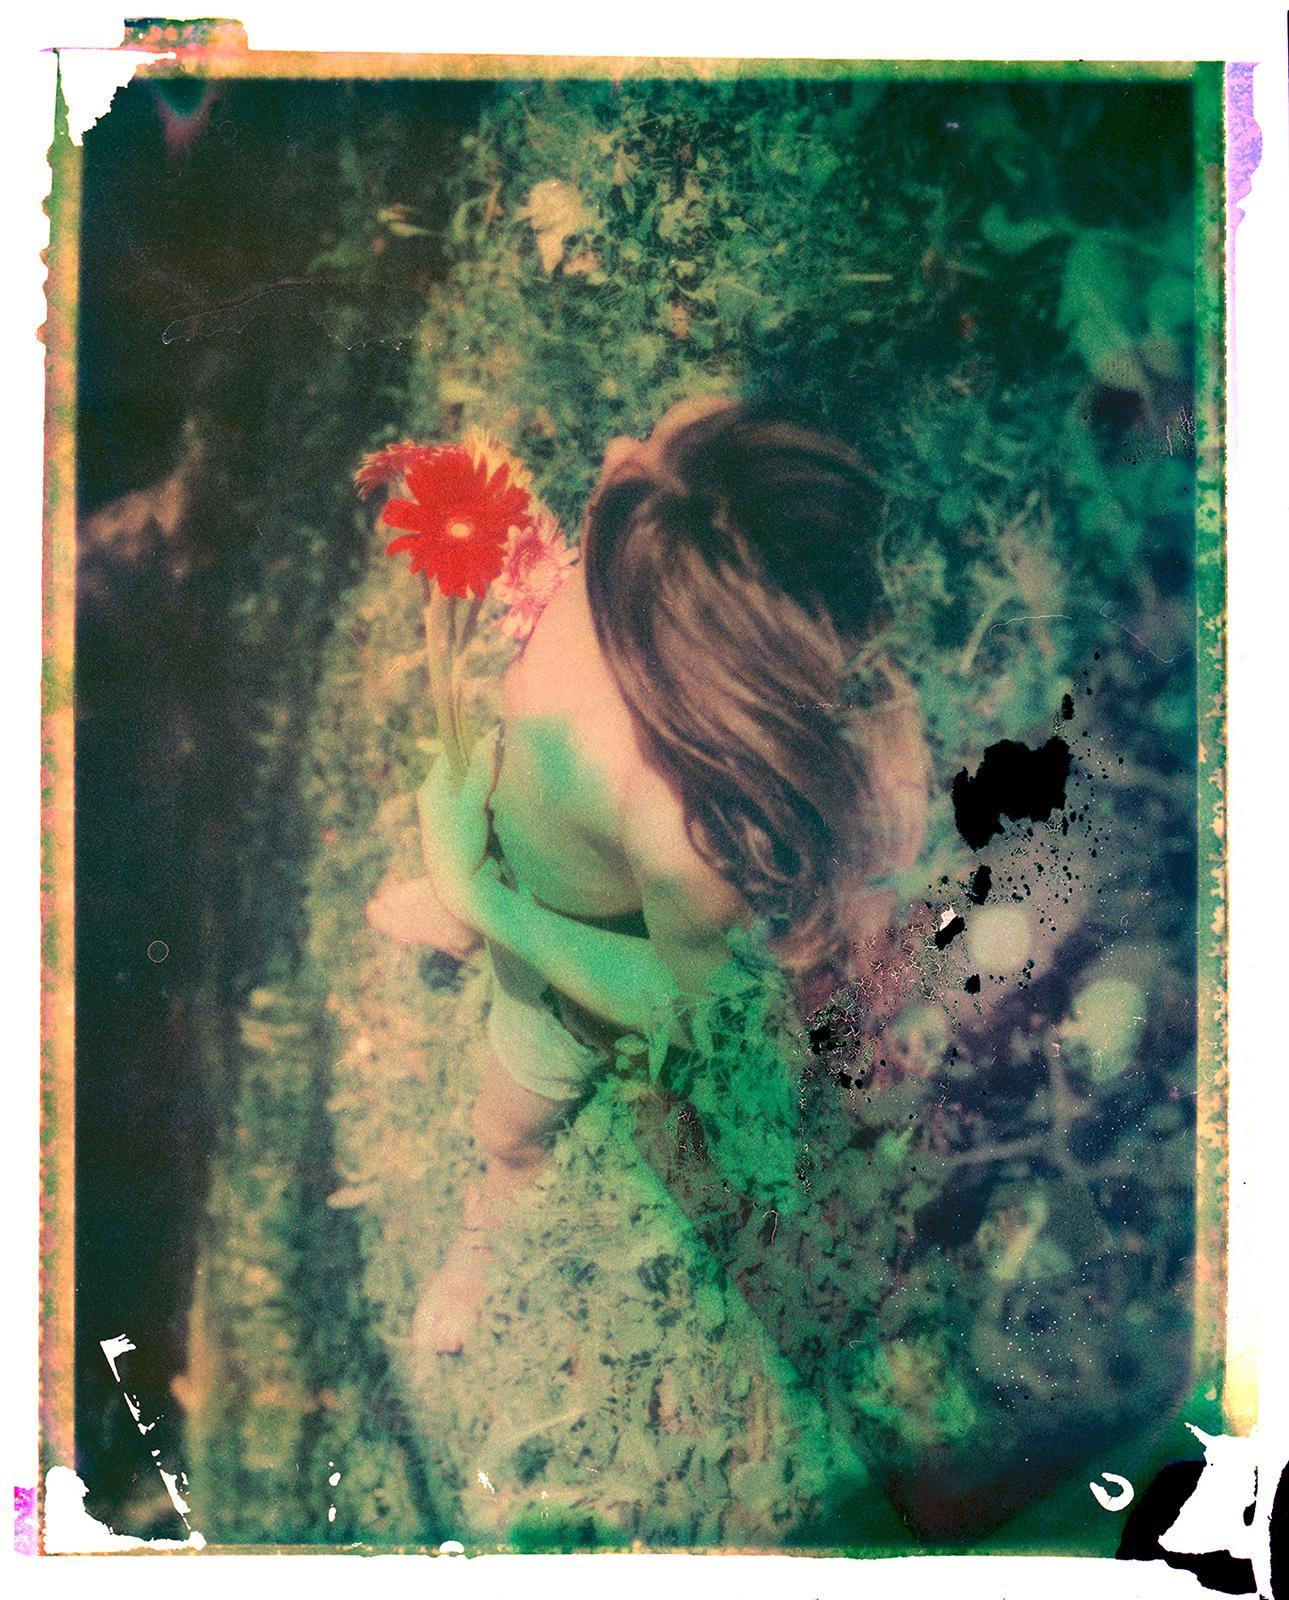 Gerbera  - Contemporary, Polaroid, Fotografie, Kindheit. 21. Jahrhundert, abstrakt